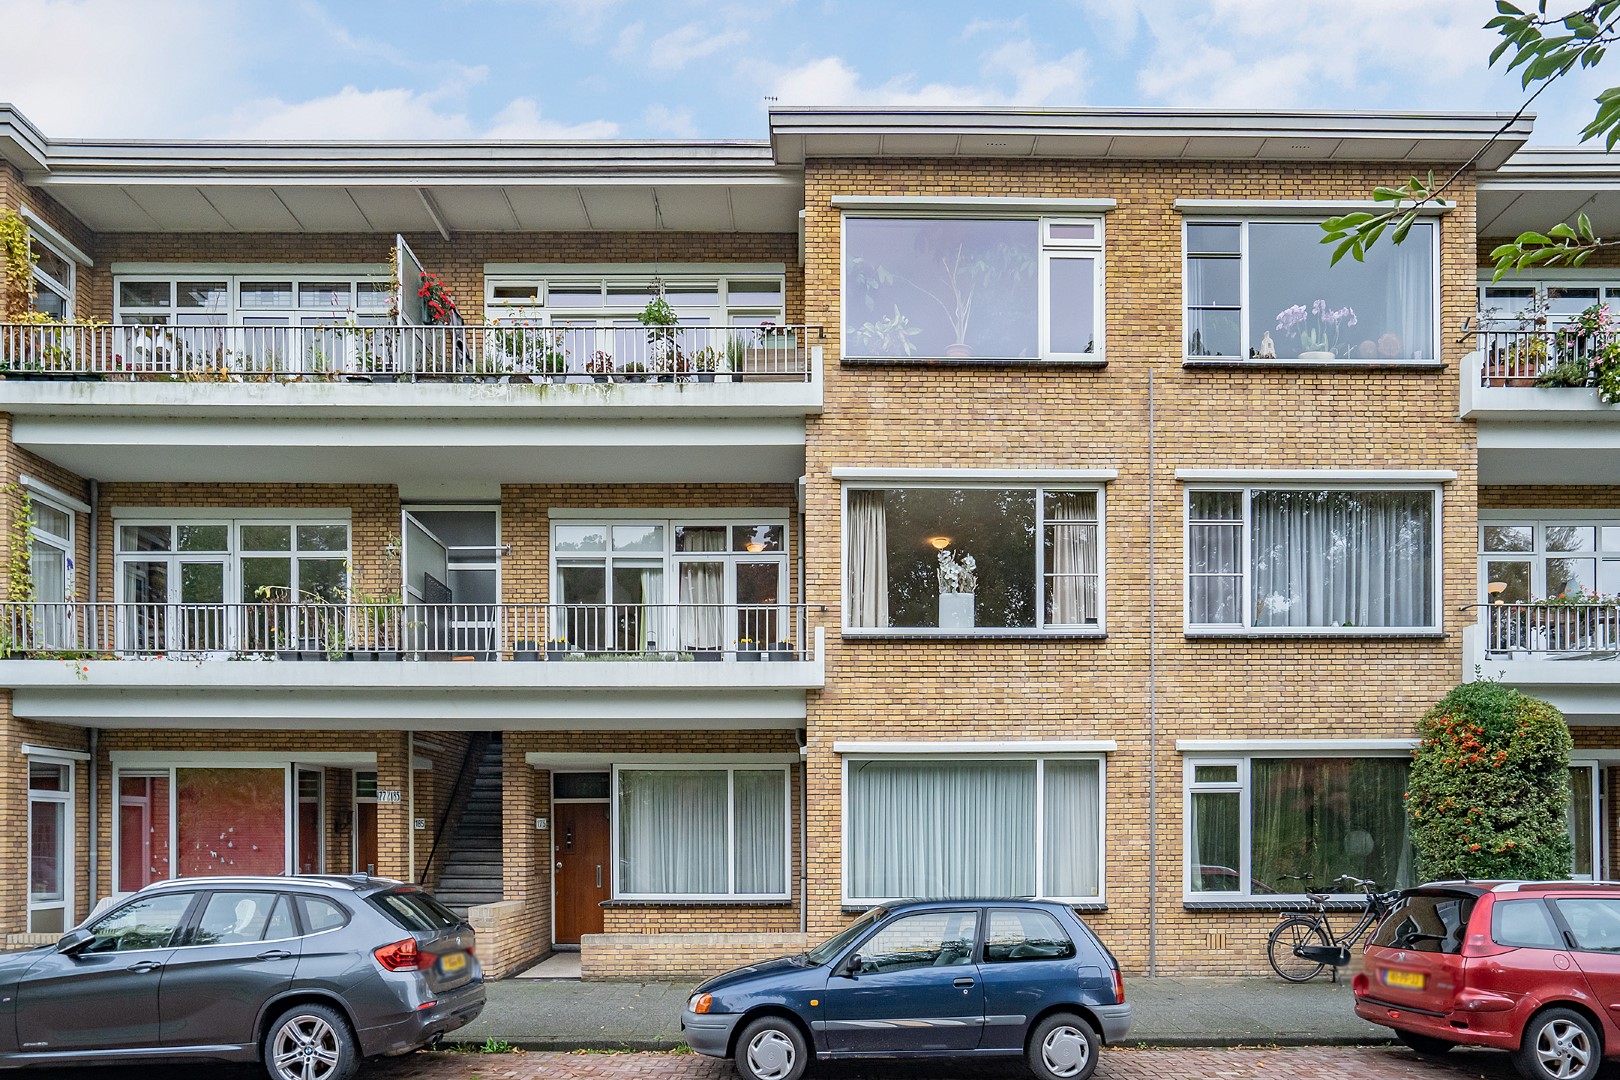 5-kamer appartement in Bezuidenhout met woon- eetkamer ensuite, 3 slaapkamers en 2 balkons.